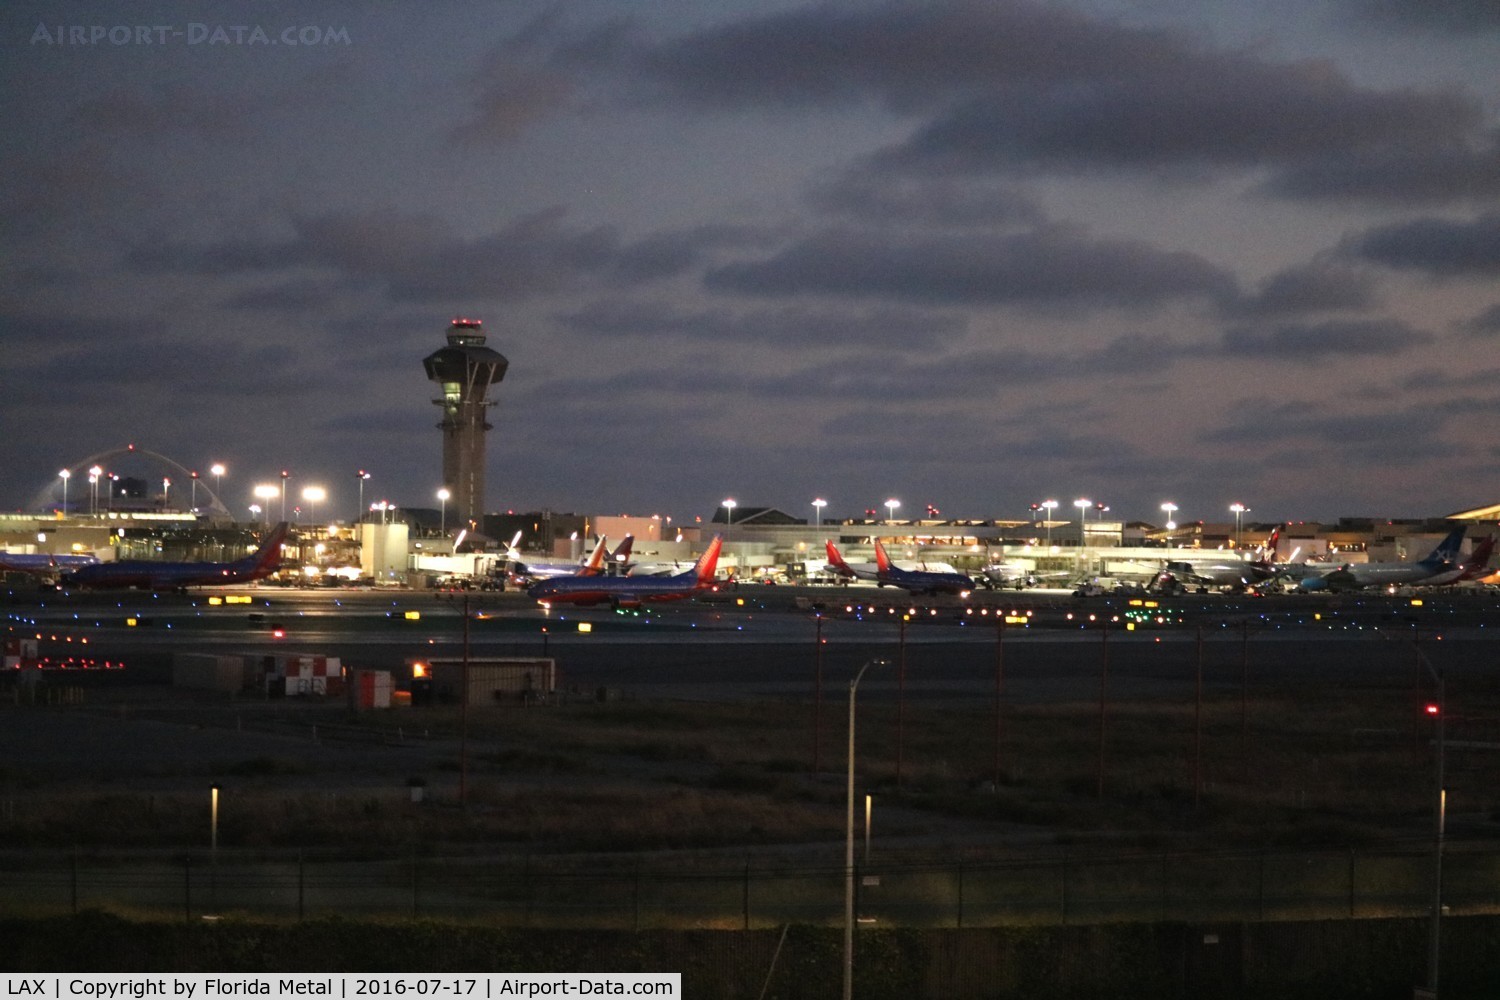 Los Angeles International Airport (LAX) - LAX at night